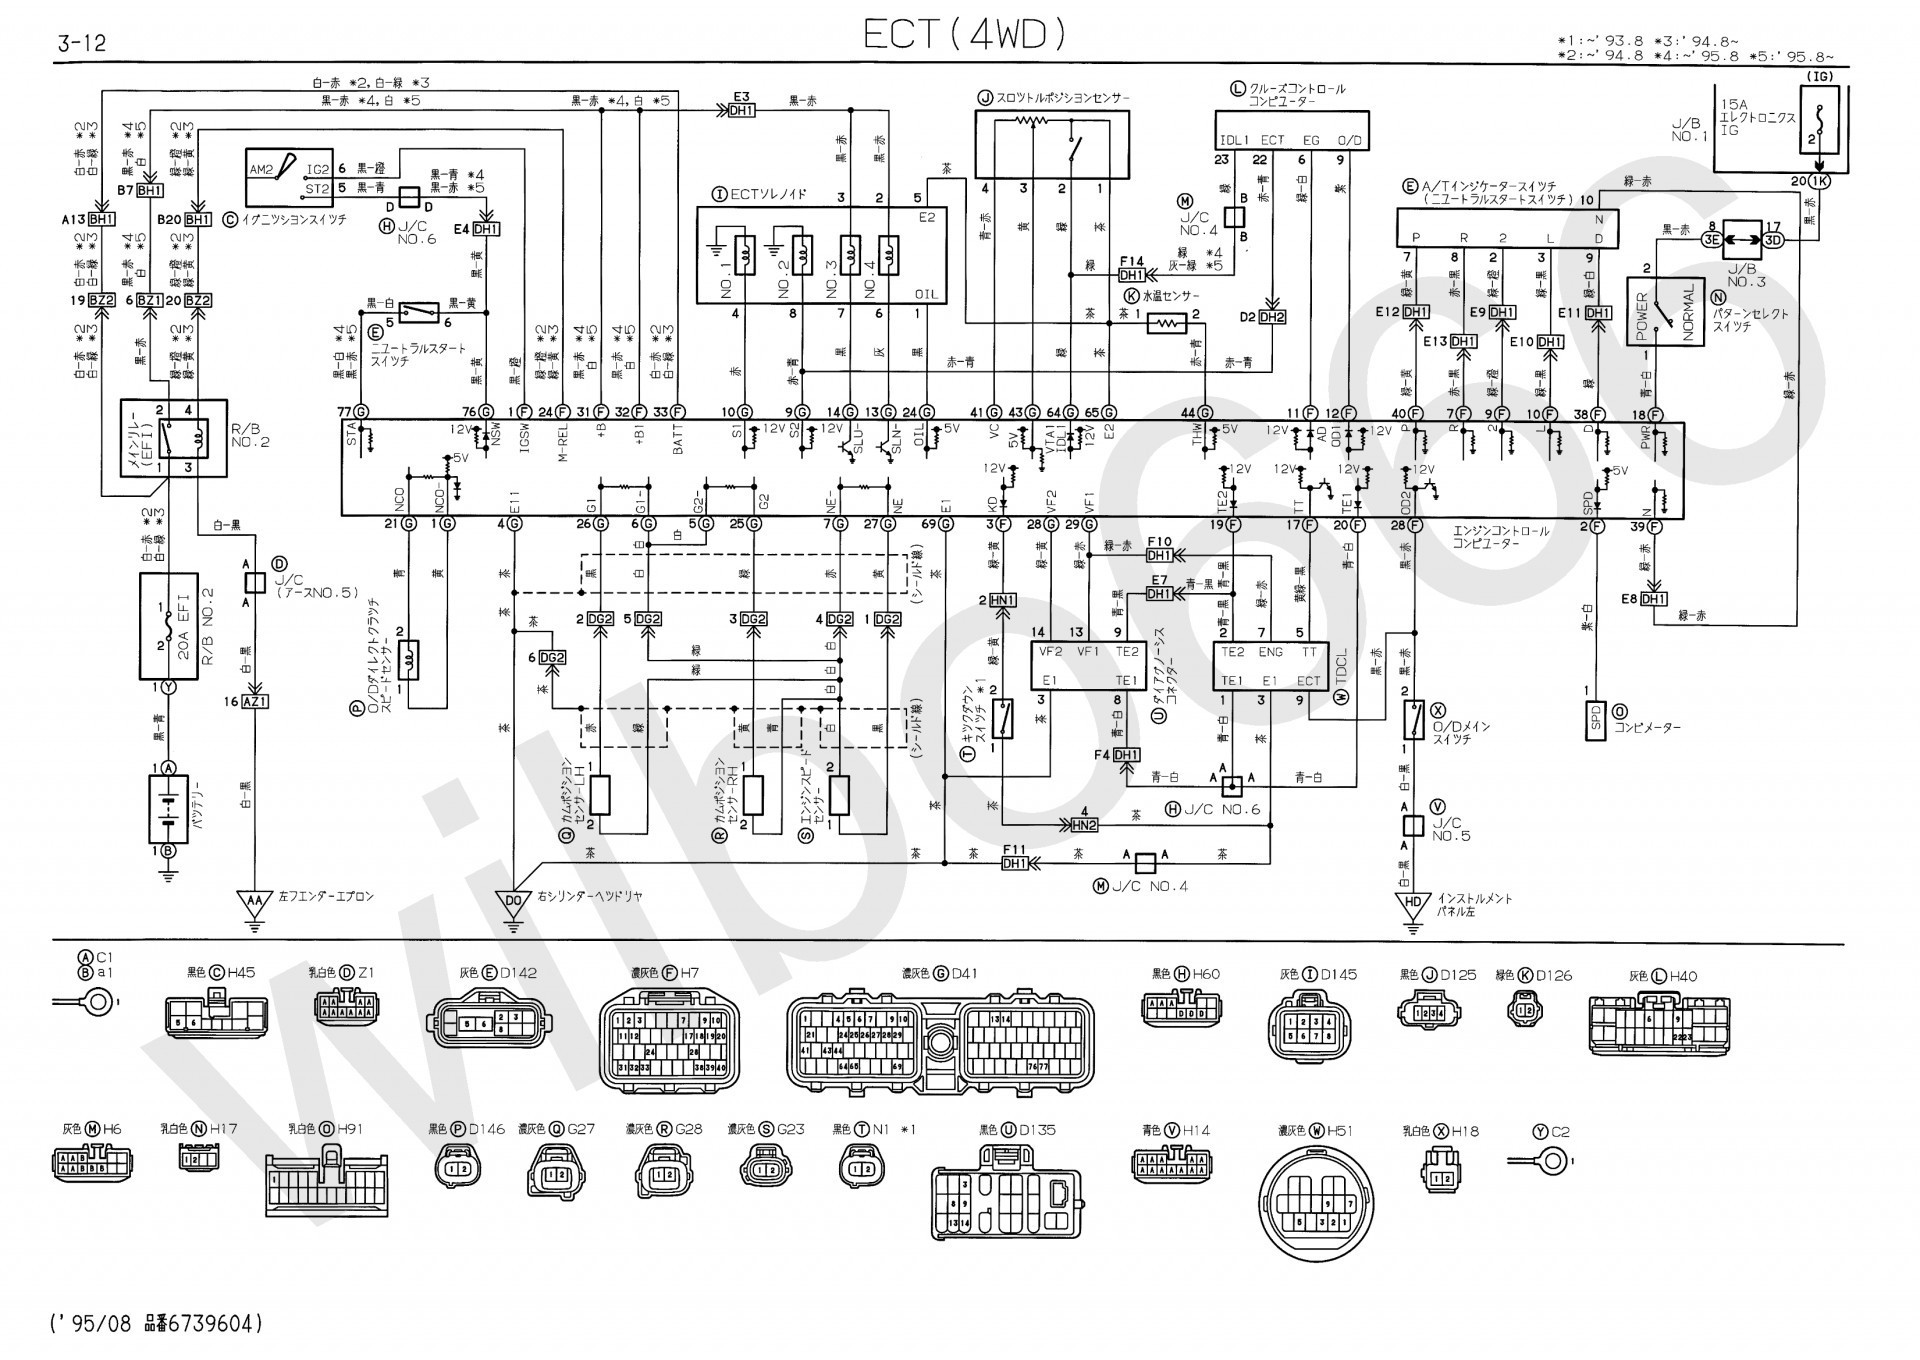 Ford Galaxy Engine Diagram Brakes Go to Floor Diagram A New Front Brakes Diagram Rear Brake Of Ford Galaxy Engine Diagram